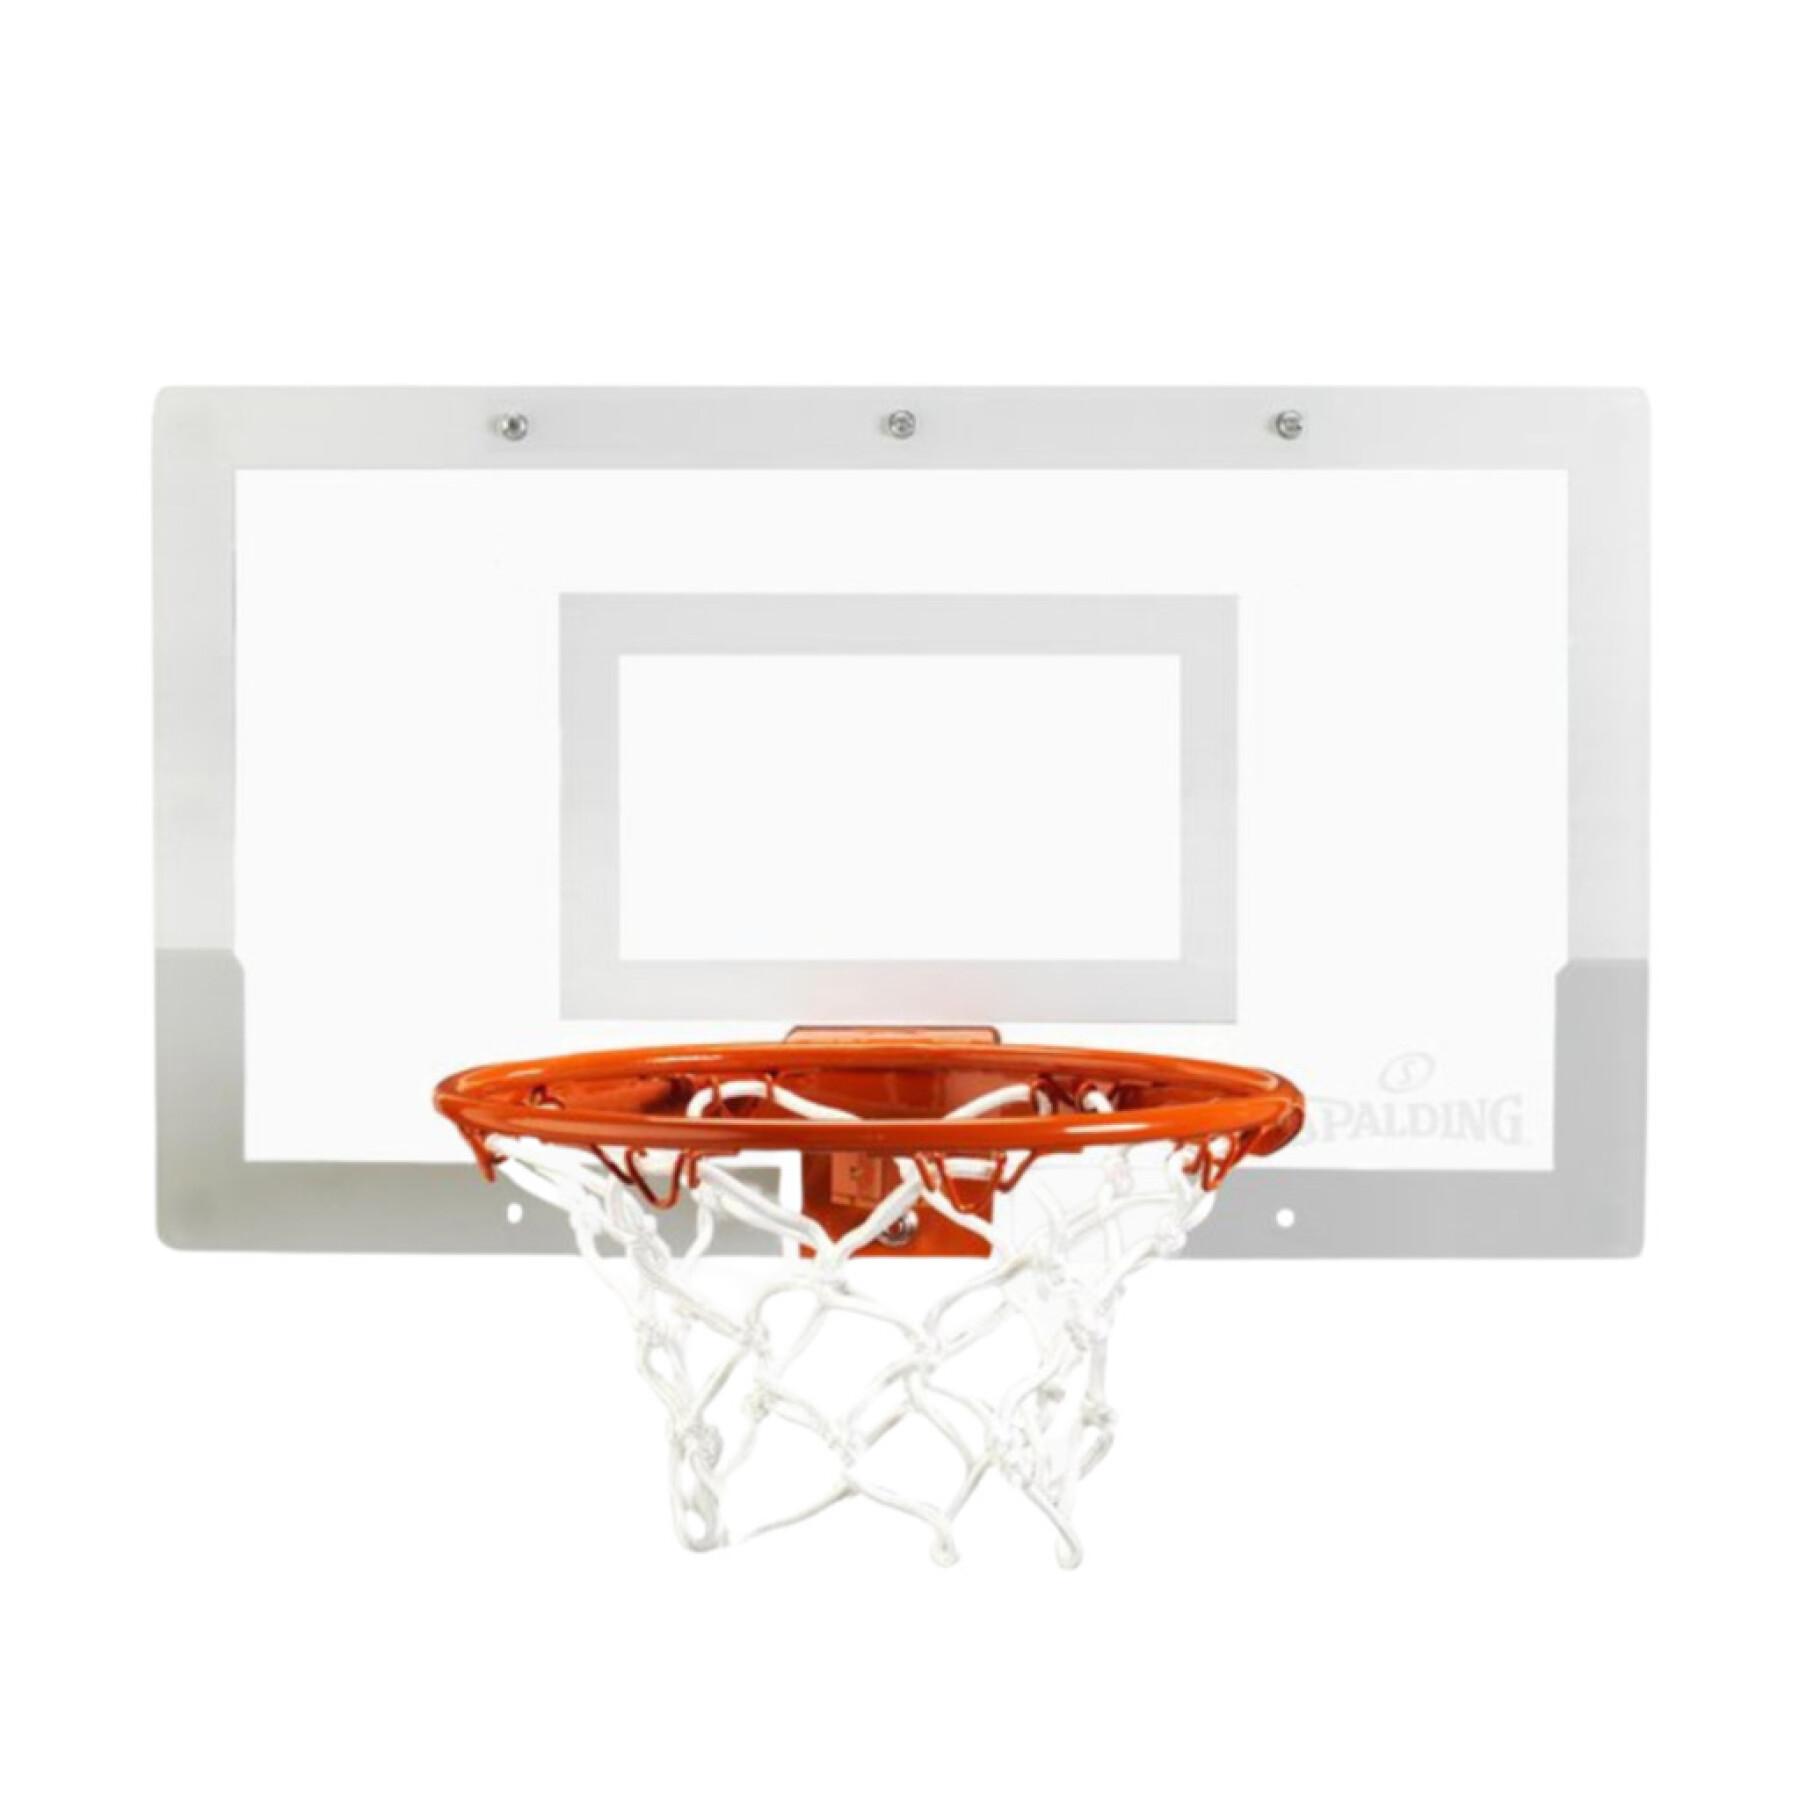 Basketball hoop Spalding Arena Slam 180